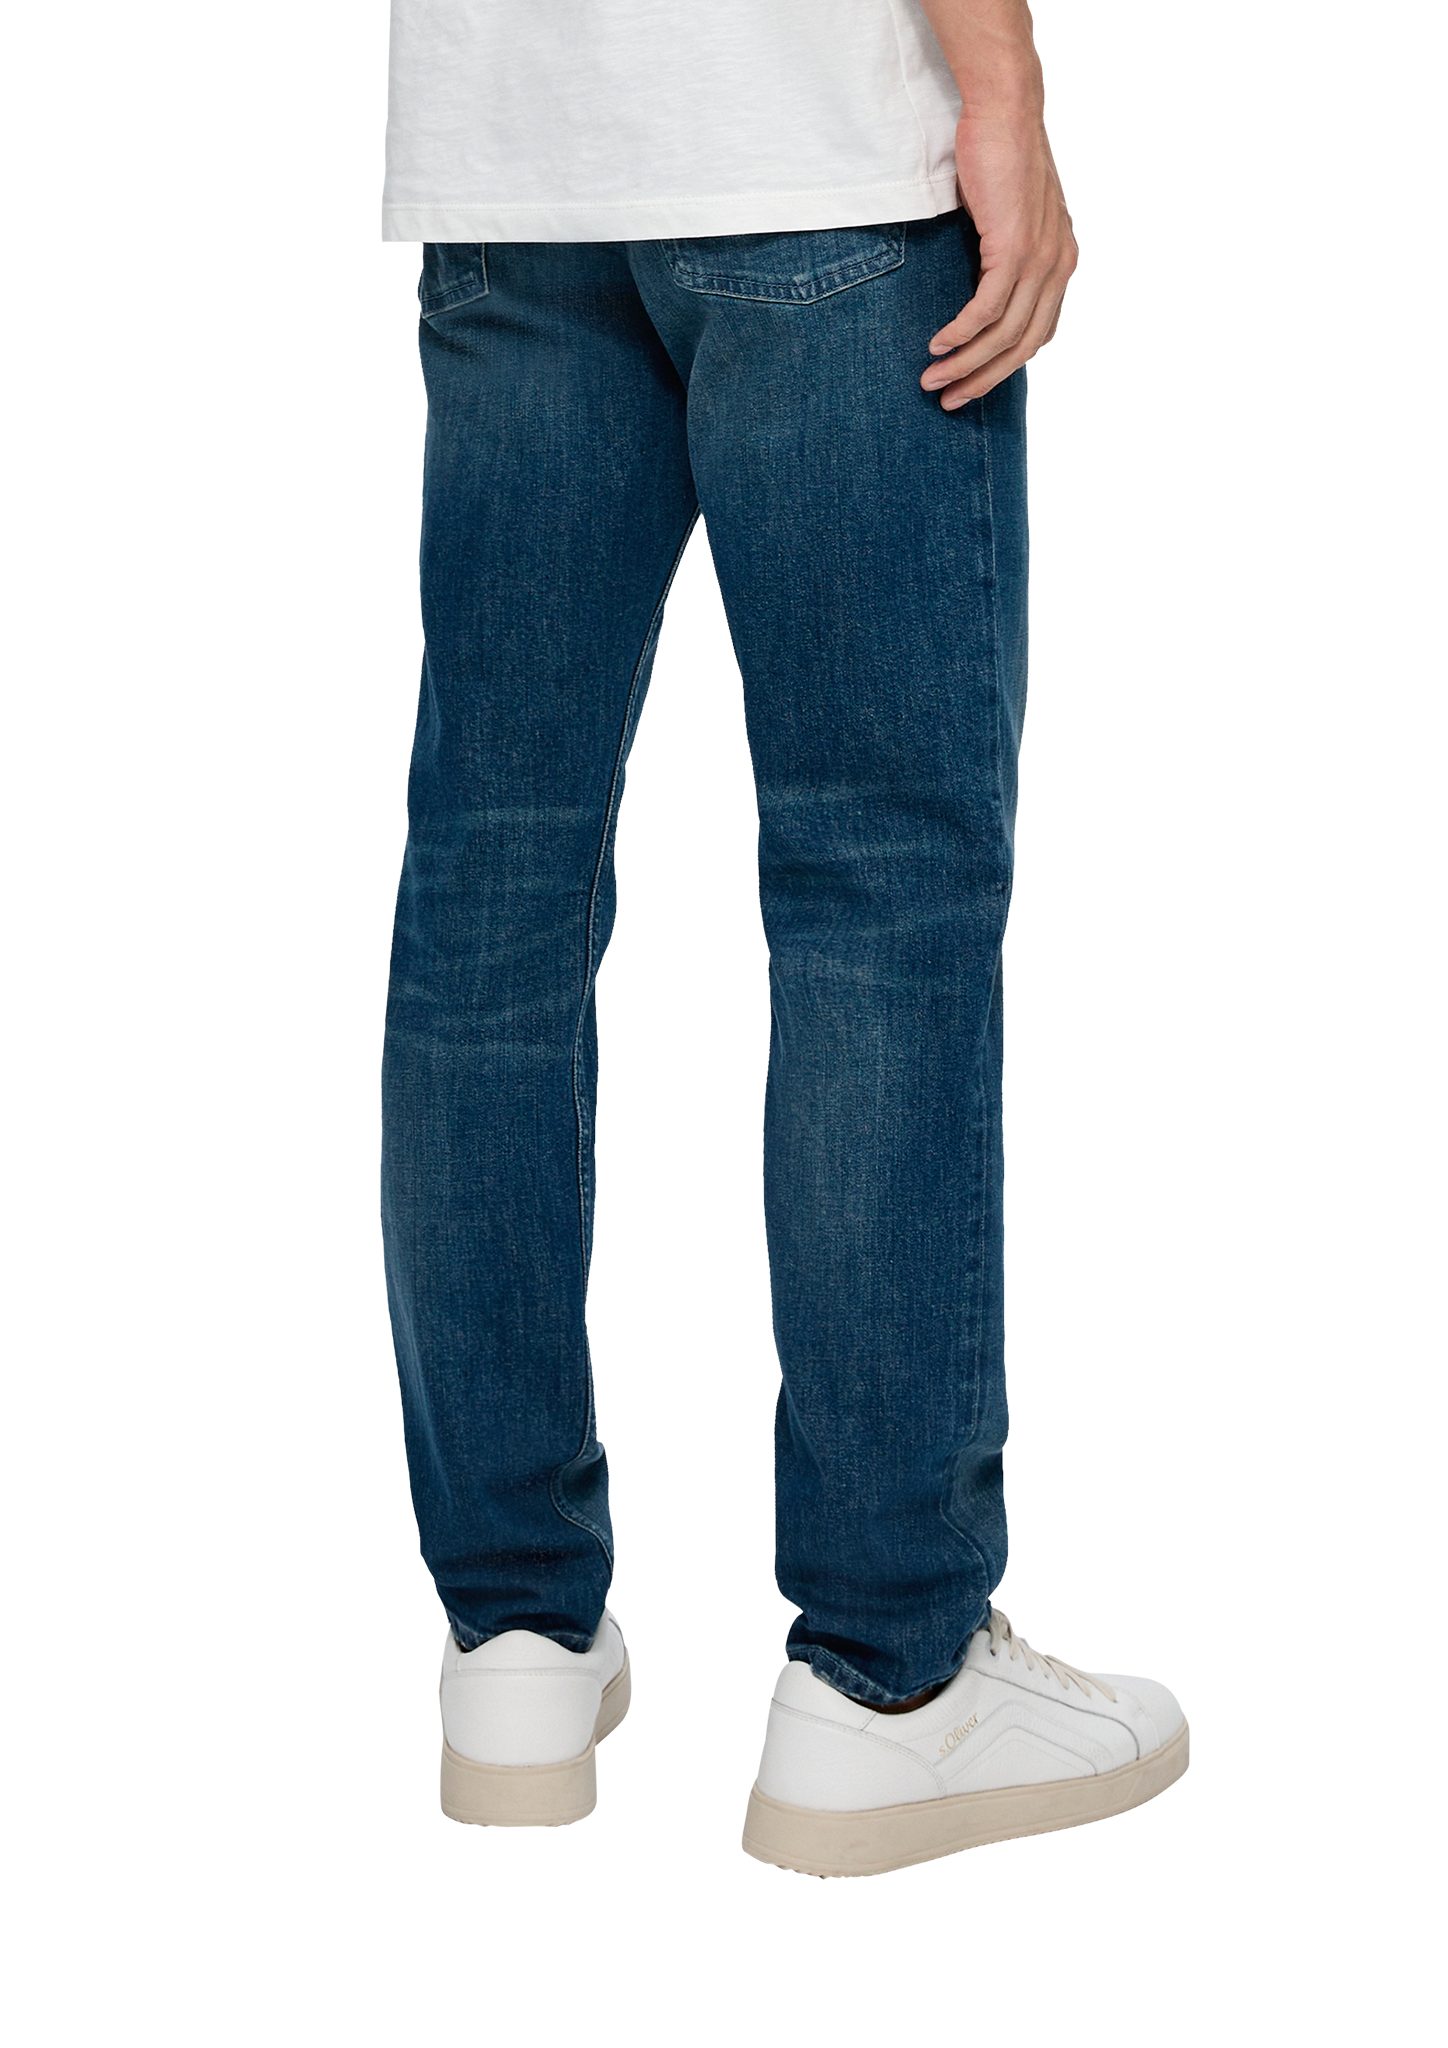 Nelio / / Jeans Leg Slim Label-Patch Fit Rise dunkelblau Mid Stoffhose s.Oliver / Baumwollstretch / Slim